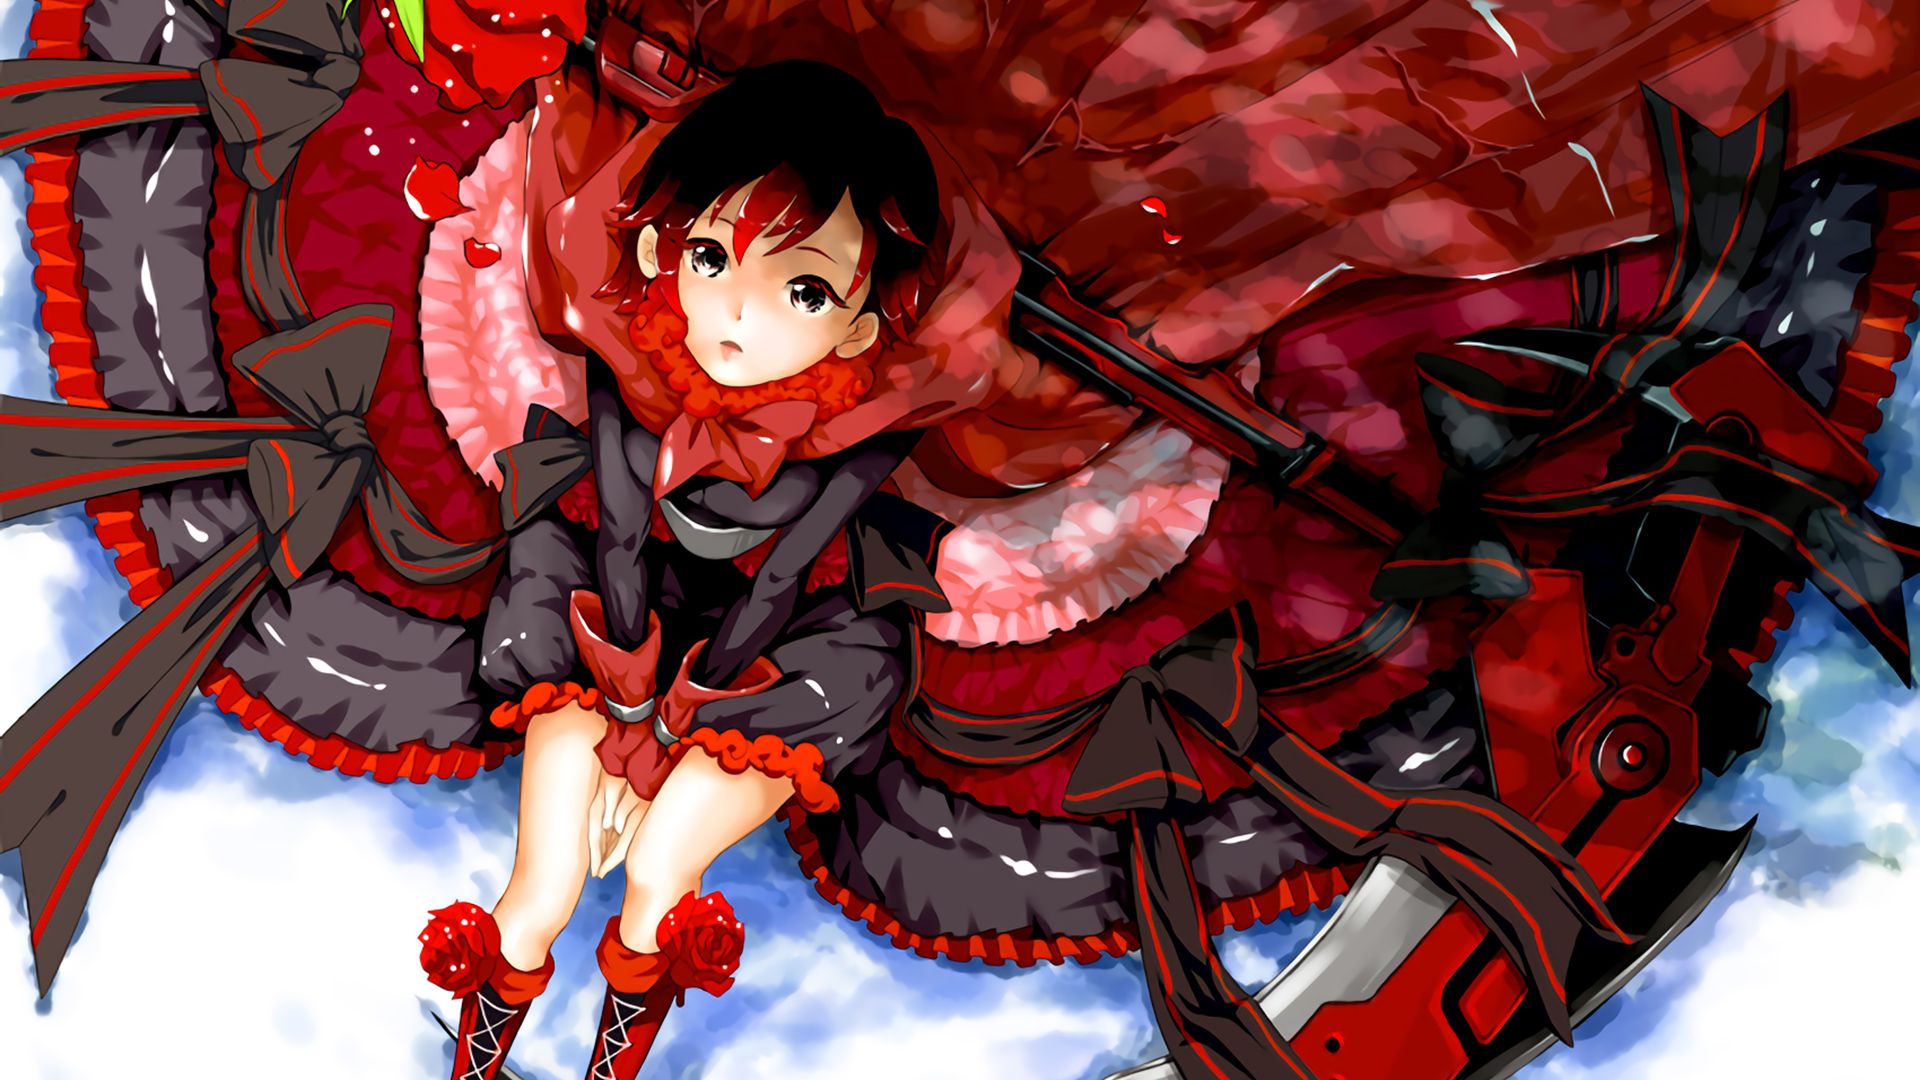 Wallpaper dark, anime girl, ruby rose desktop wallpaper, hd image, picture,  background, 955152